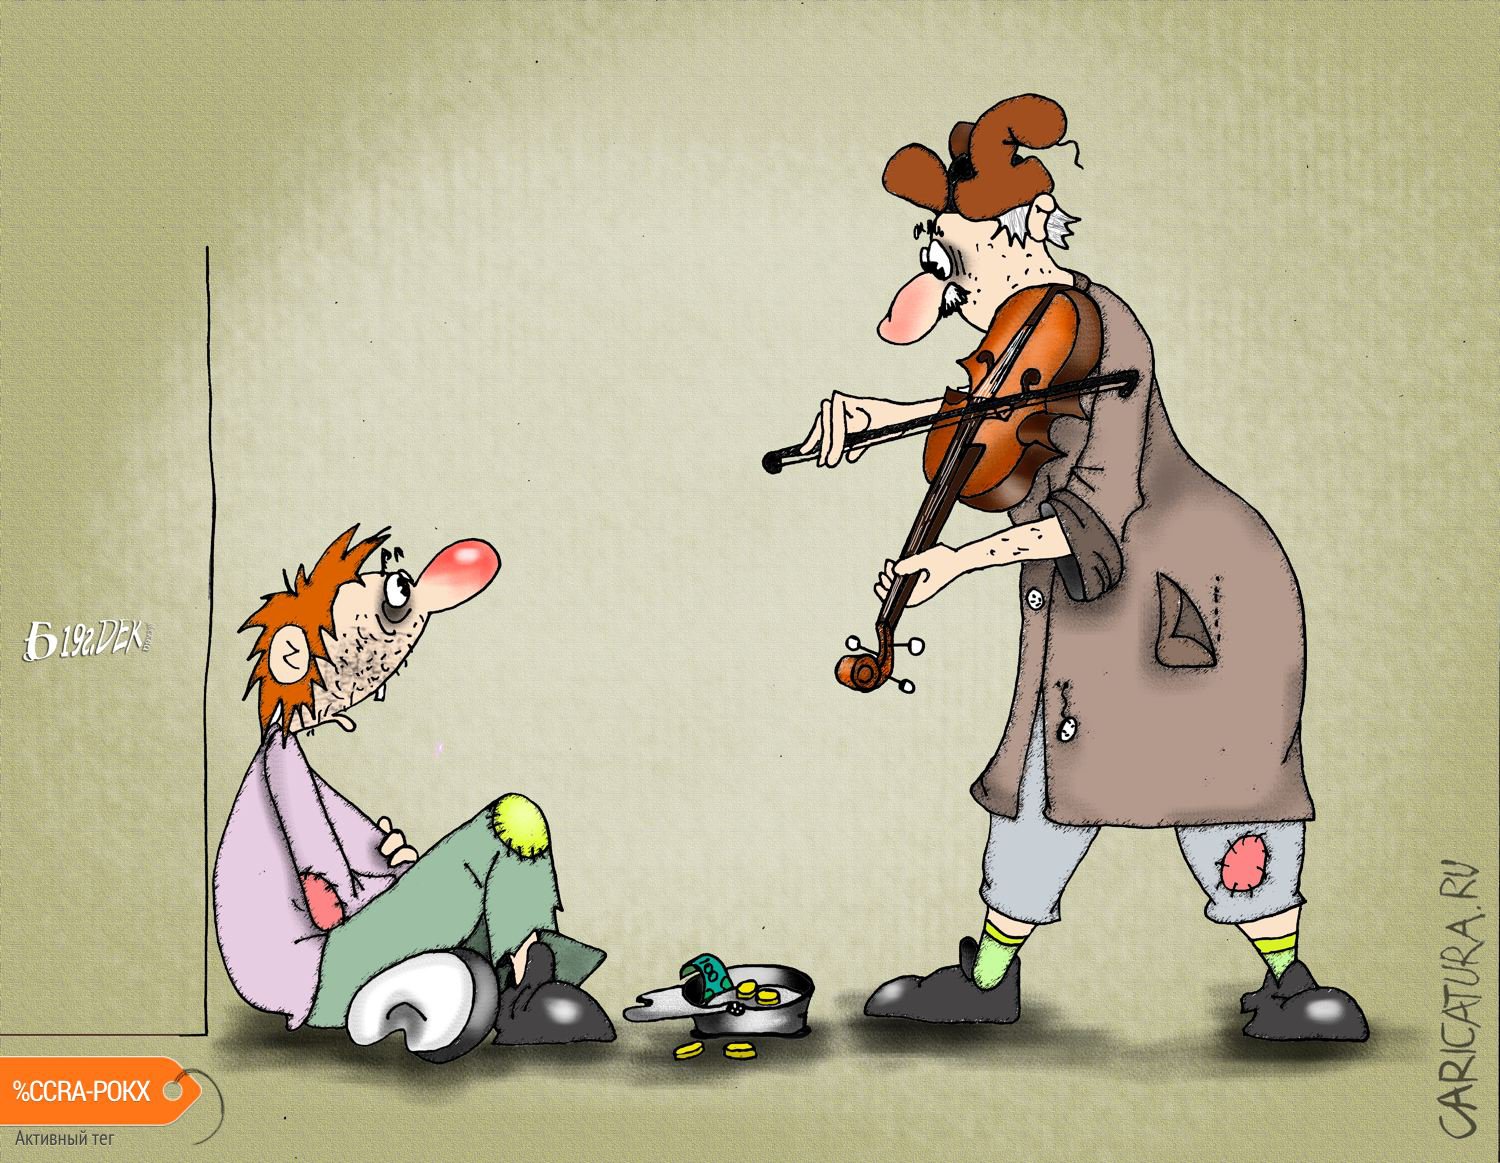 Карикатура "Про подаяния", Борис Демин